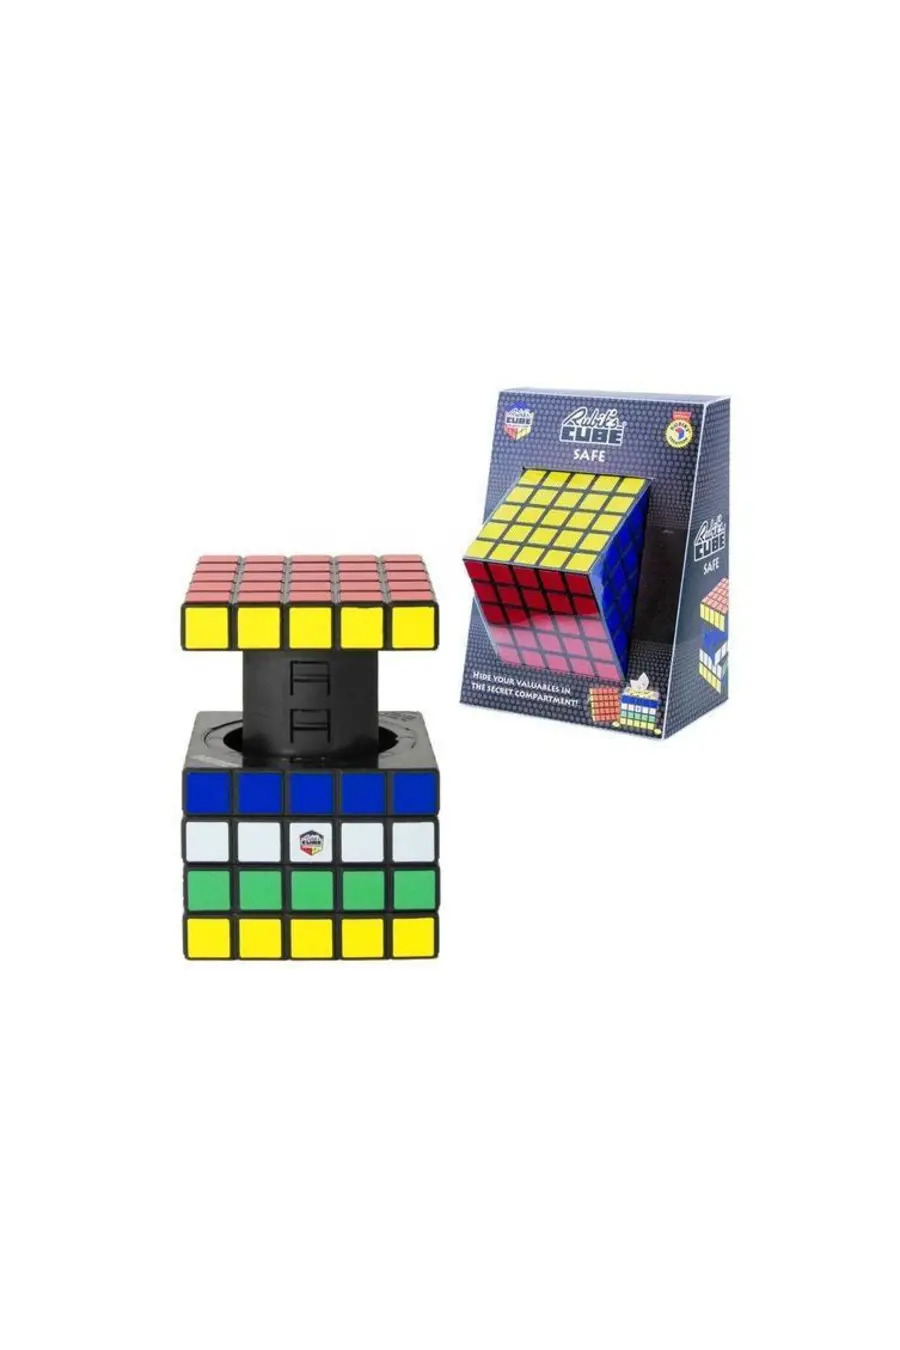 Rubik's Cube Safe